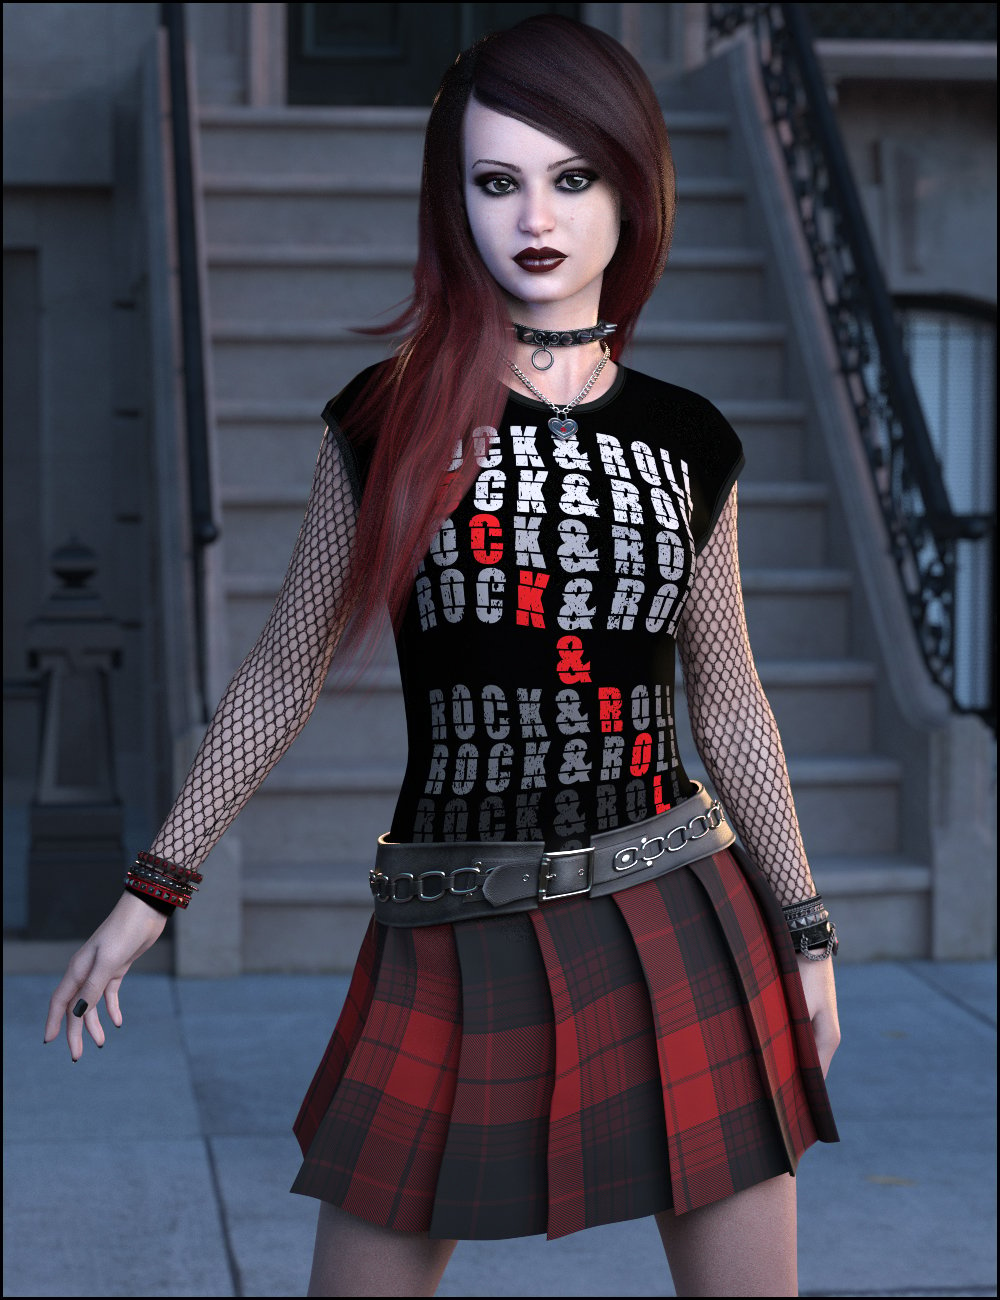 Shae for Teen Raven 8 by: DemonicaEviliusJessaii, 3D Models by Daz 3D